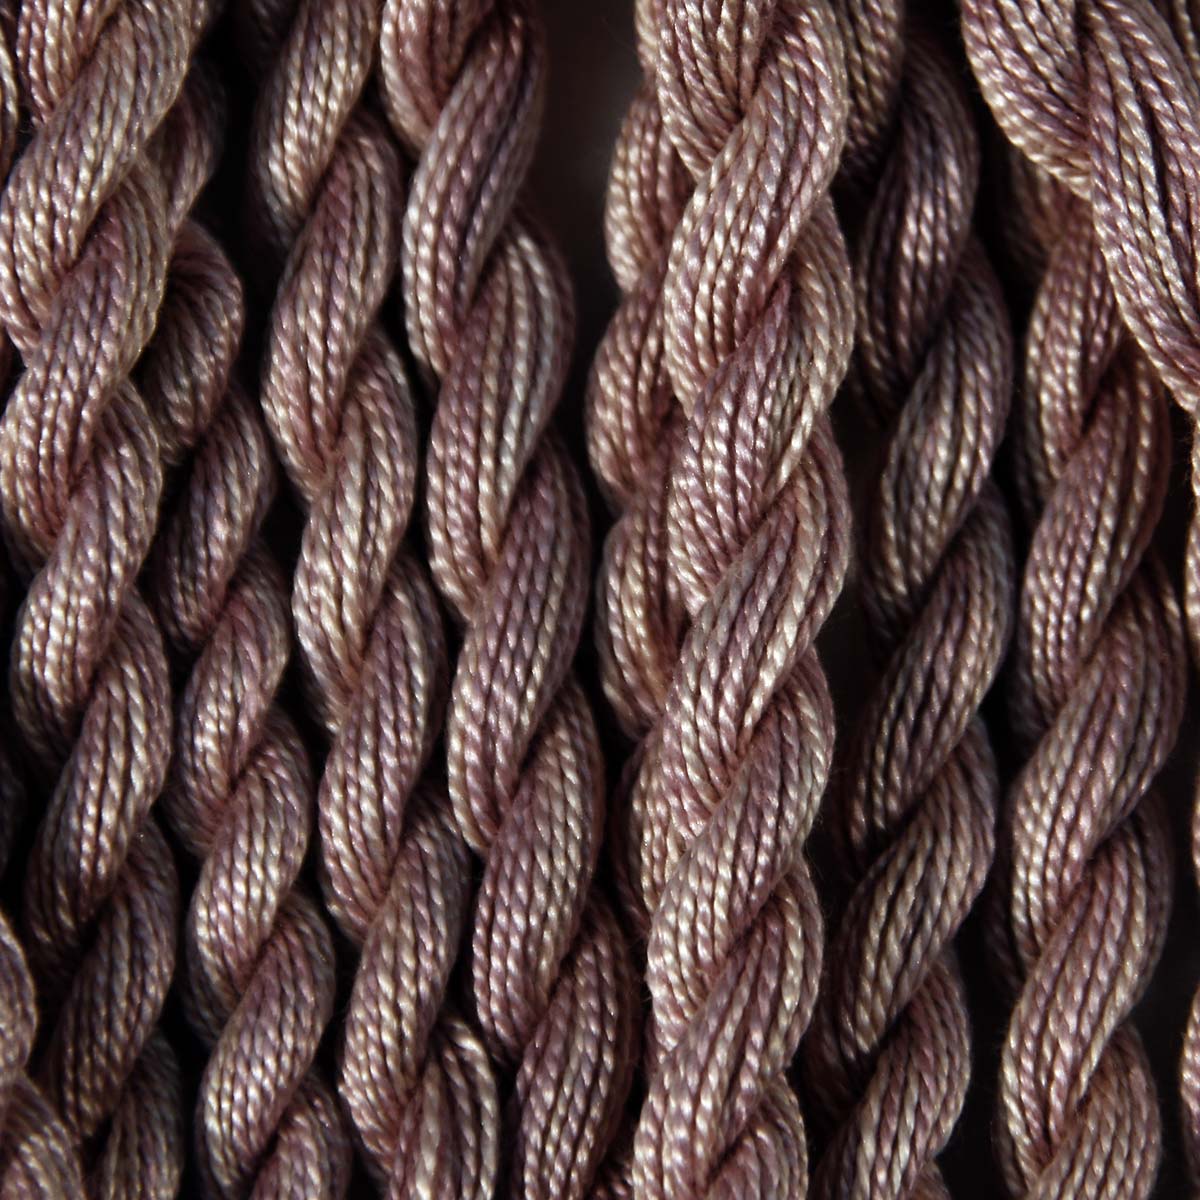 Colour Streams www.colourstreams.com.au Hand Dyed Cotton Threads Cotto Strands Slow Stitch Embroidery Textile Arts Fibre DL 23 Rose Blush Pinks Creams